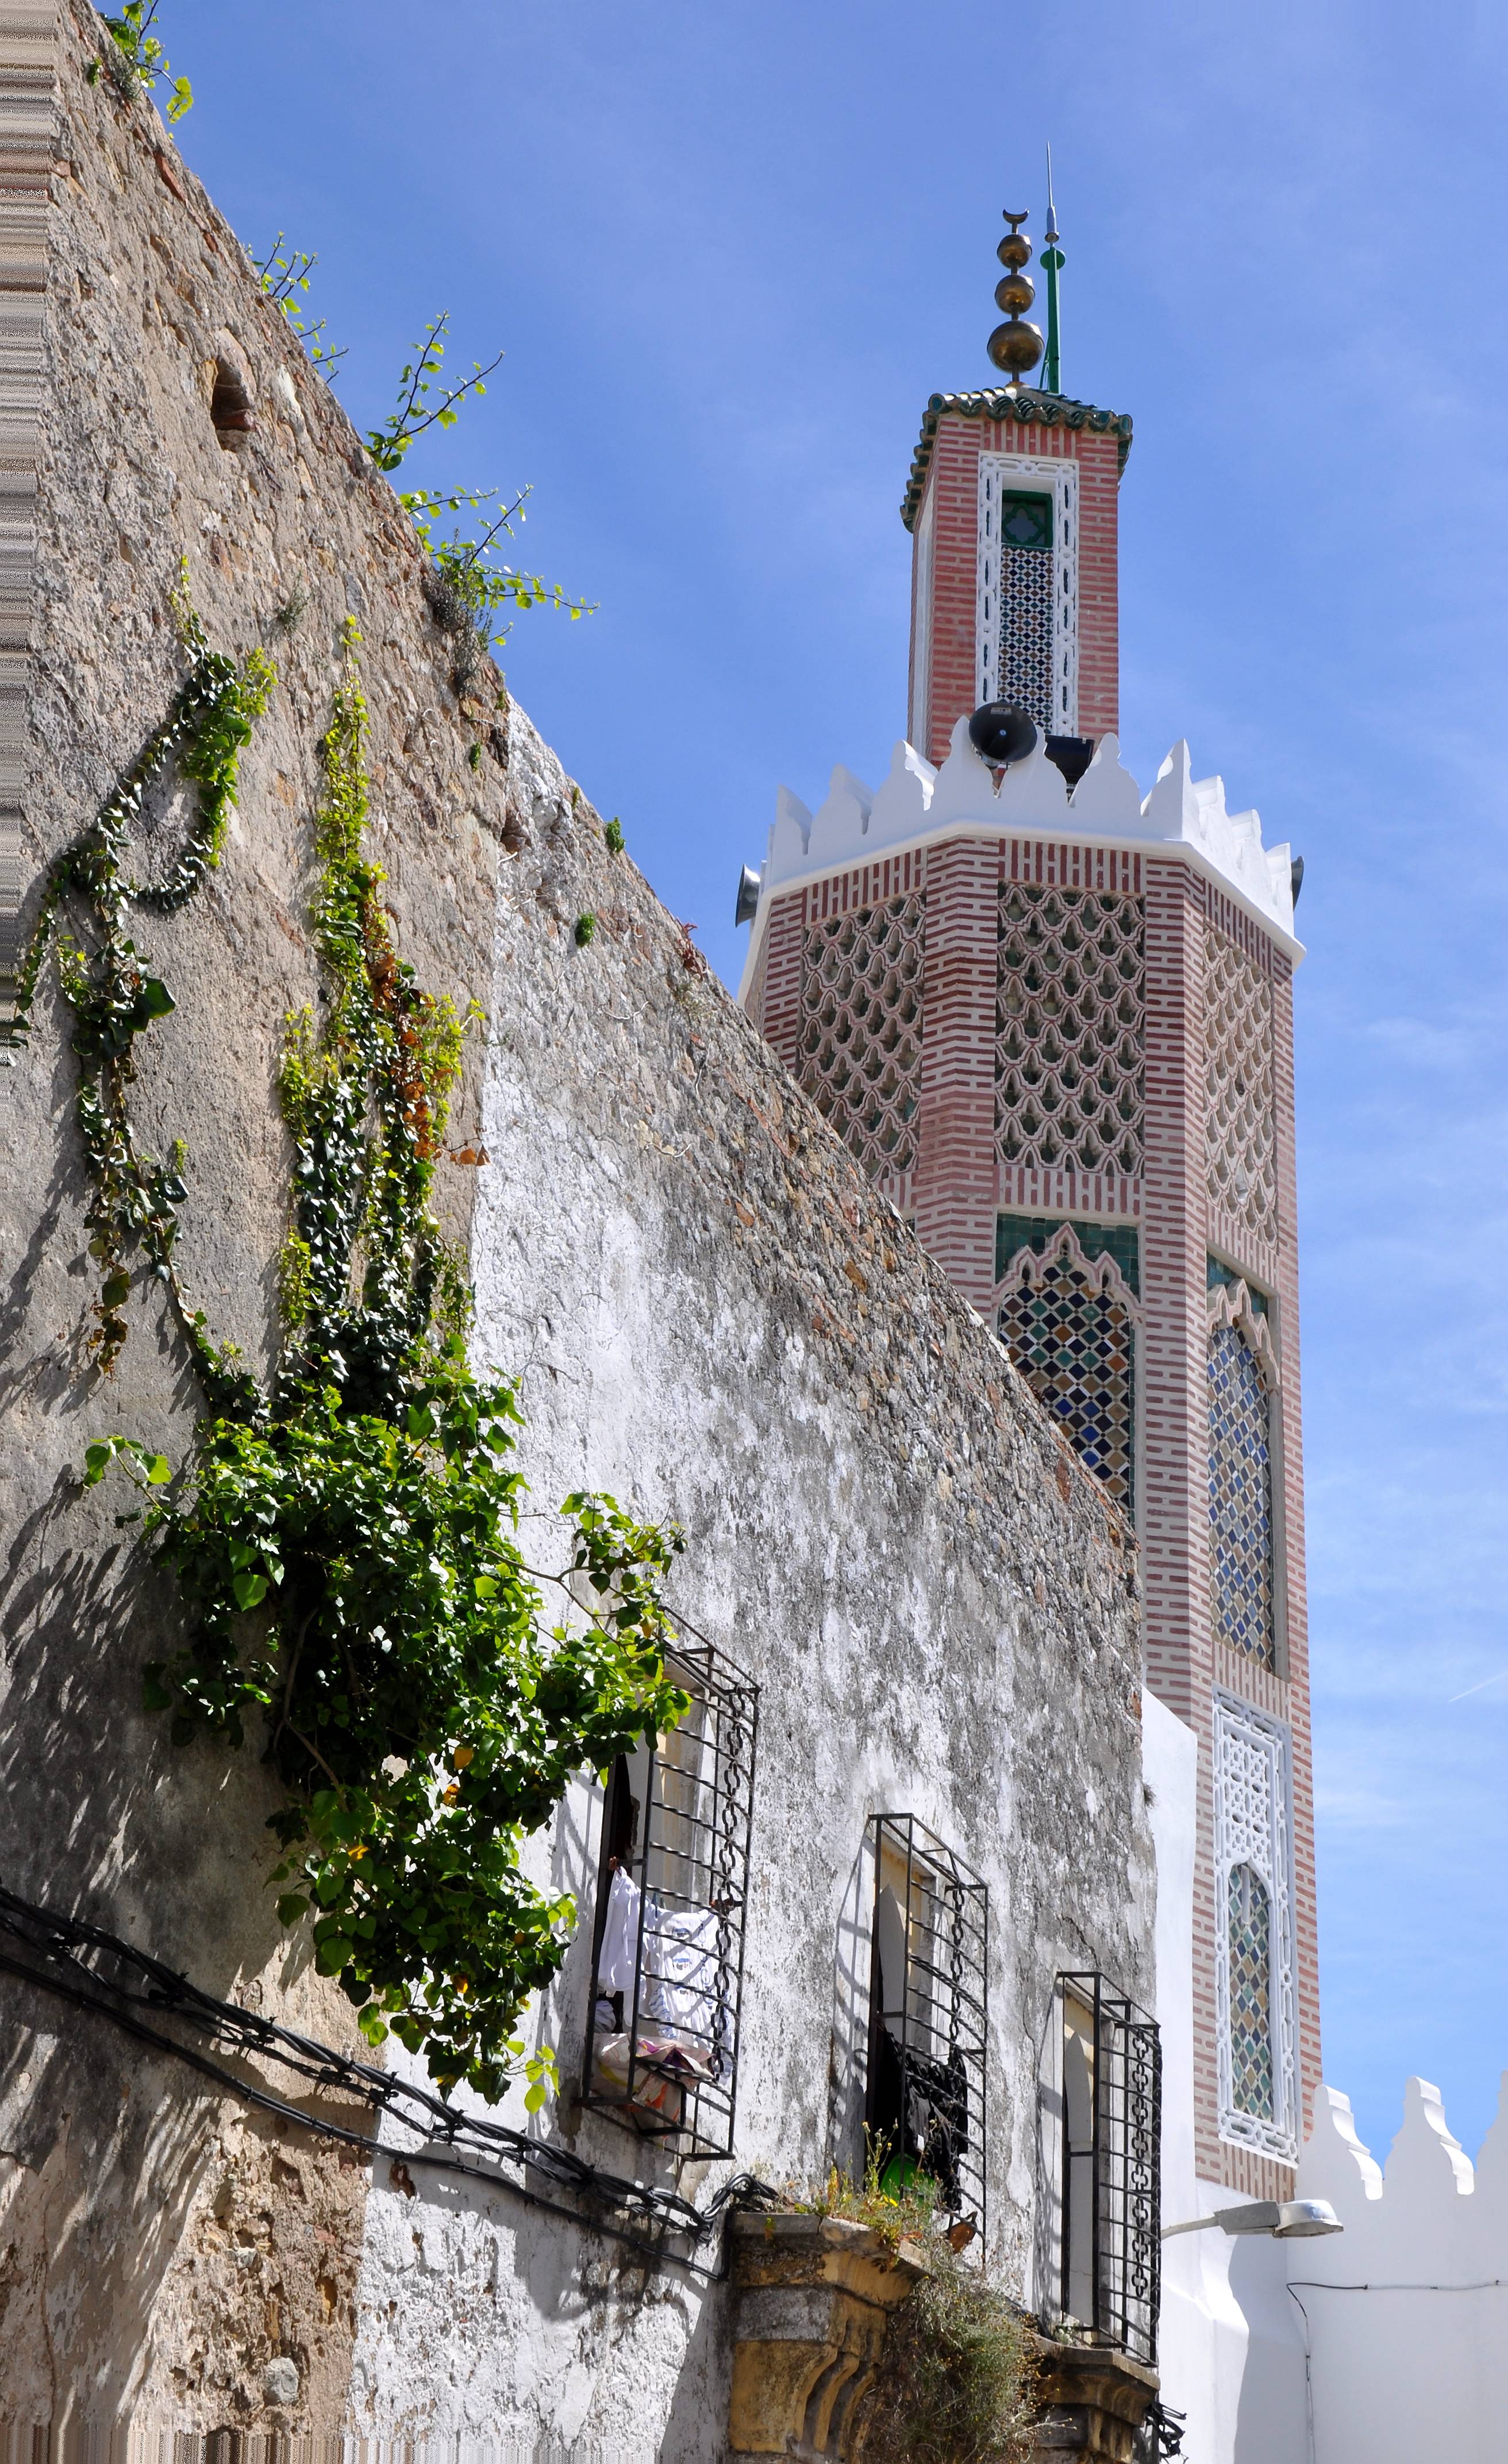 Foto: Muralla y minarete - Tanger (Tanger-Tétouan), Marruecos